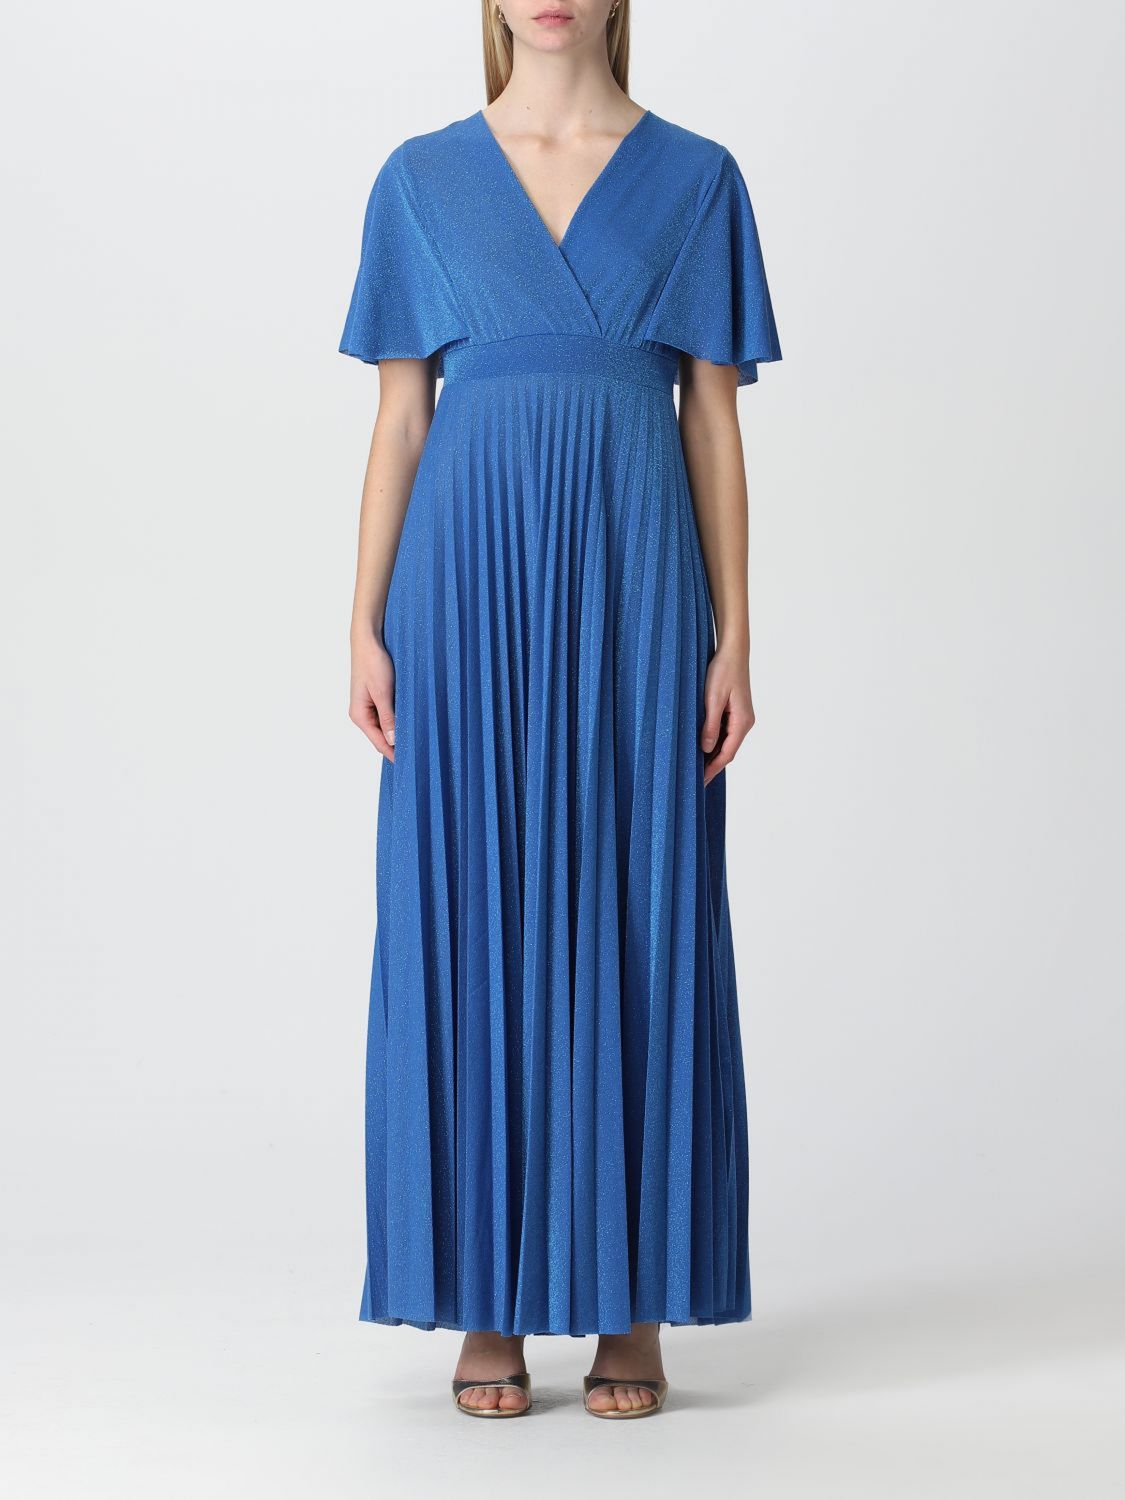 KAOS: dress for woman - Blue | Kaos dress PPJMA016 online on GIGLIO.COM